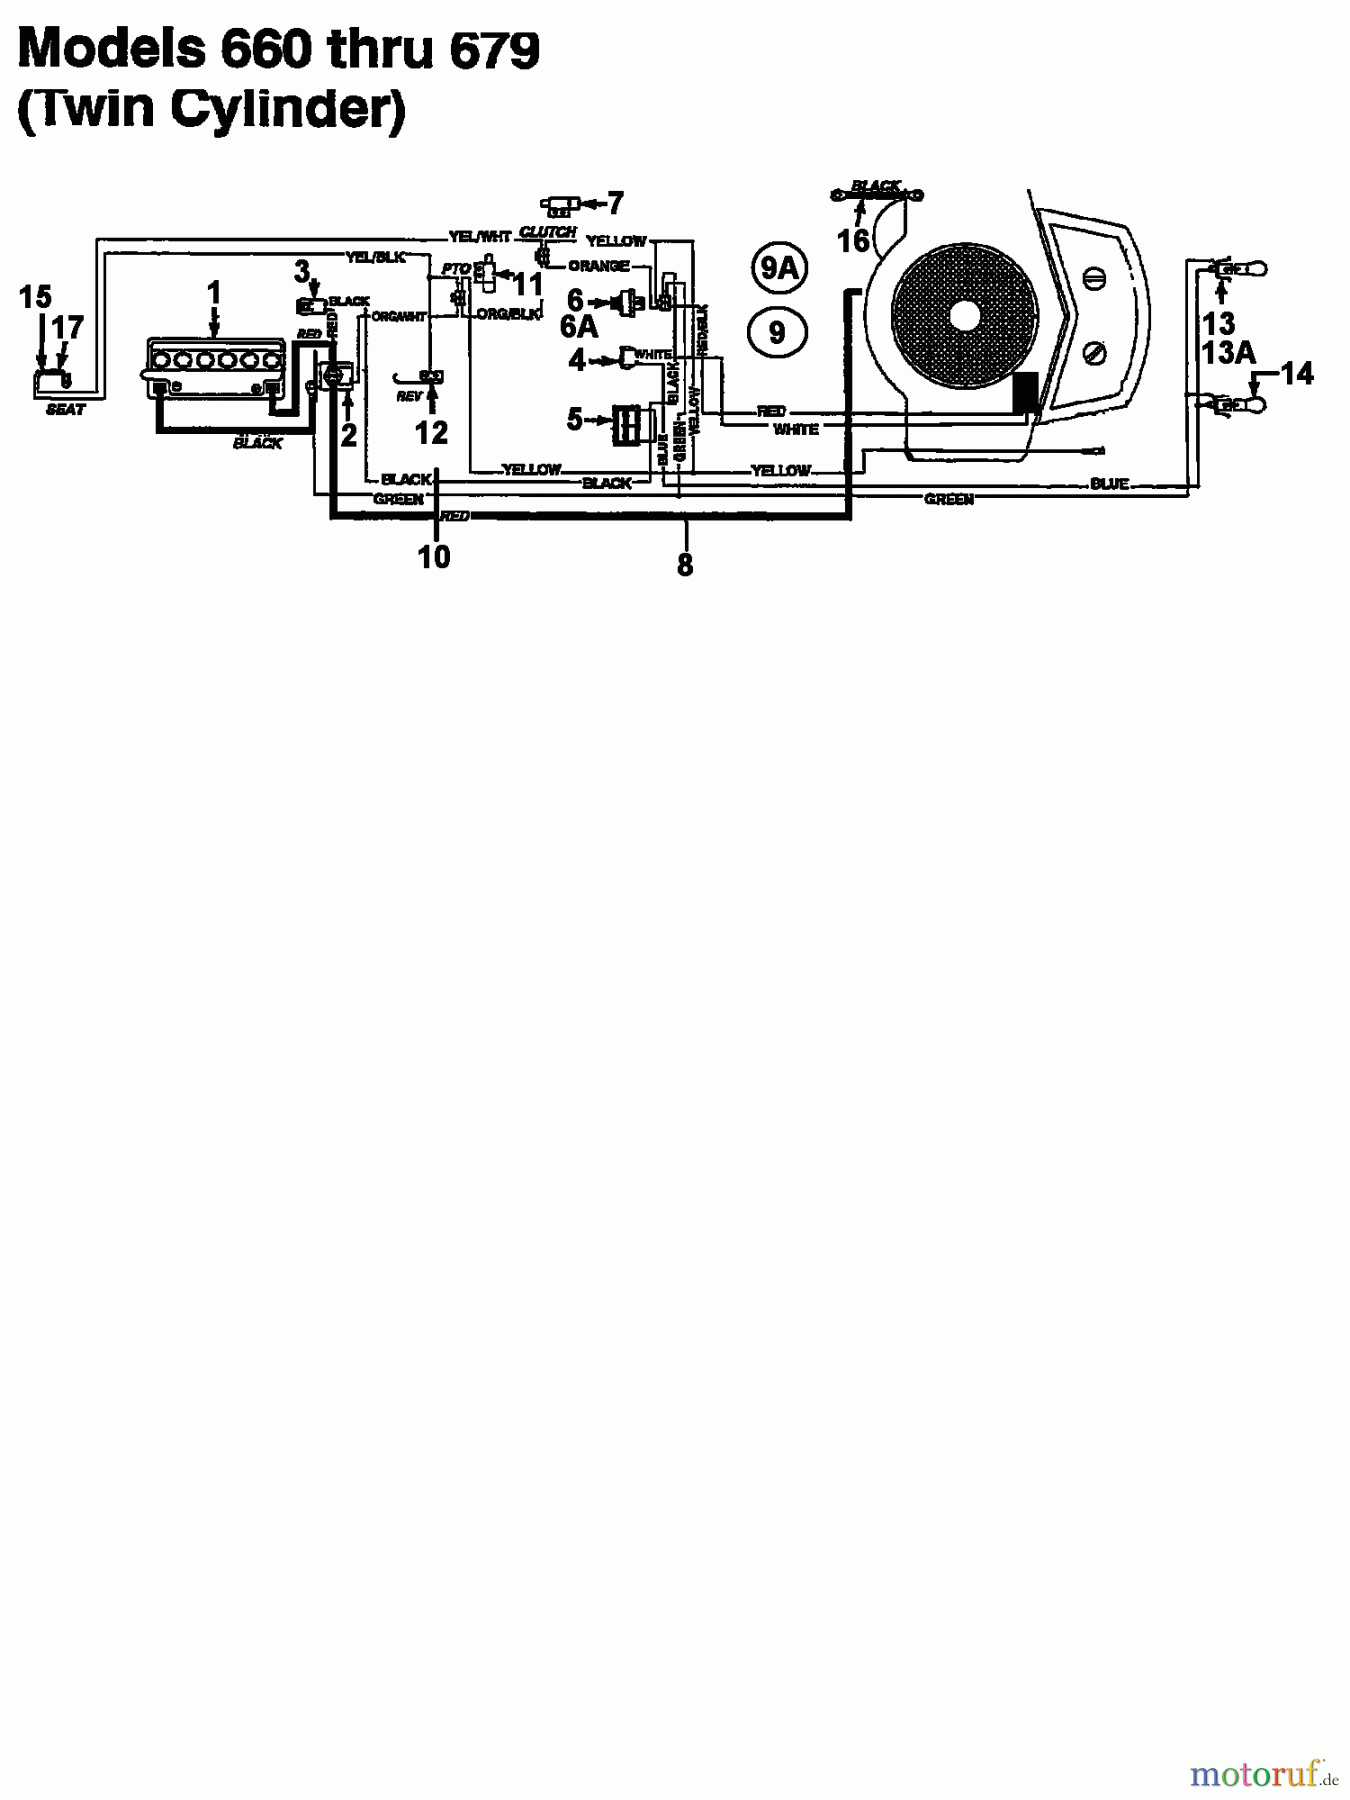  Bauhaus Rasentraktoren Funrunner 133I679F646  (1993) Schaltplan 2 Zylinder